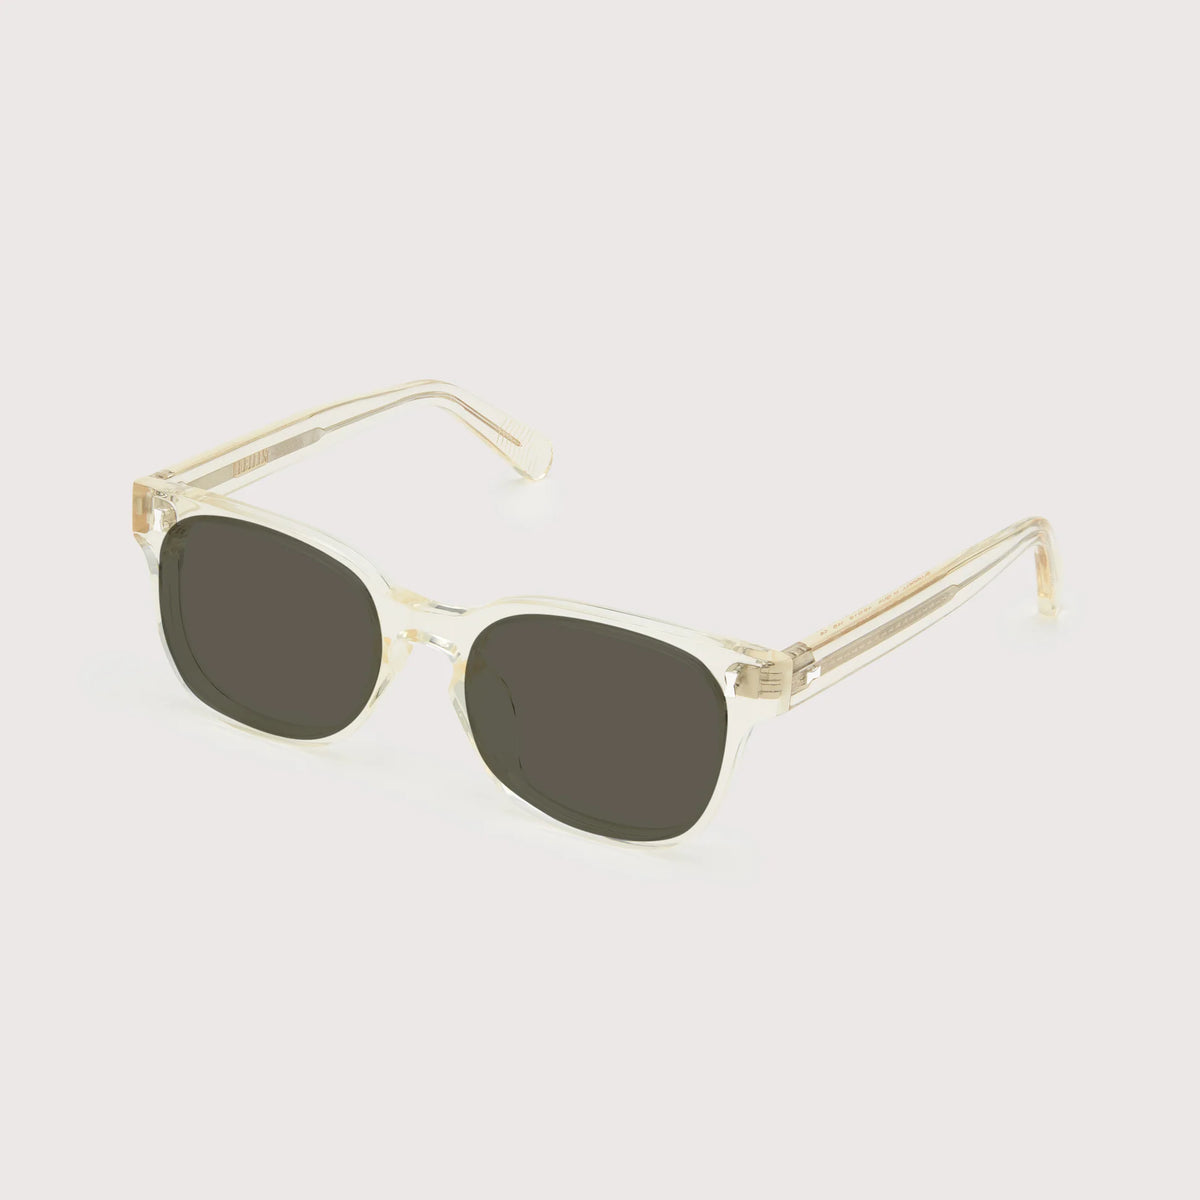 Quartz Cubitts Blundell sunglasses